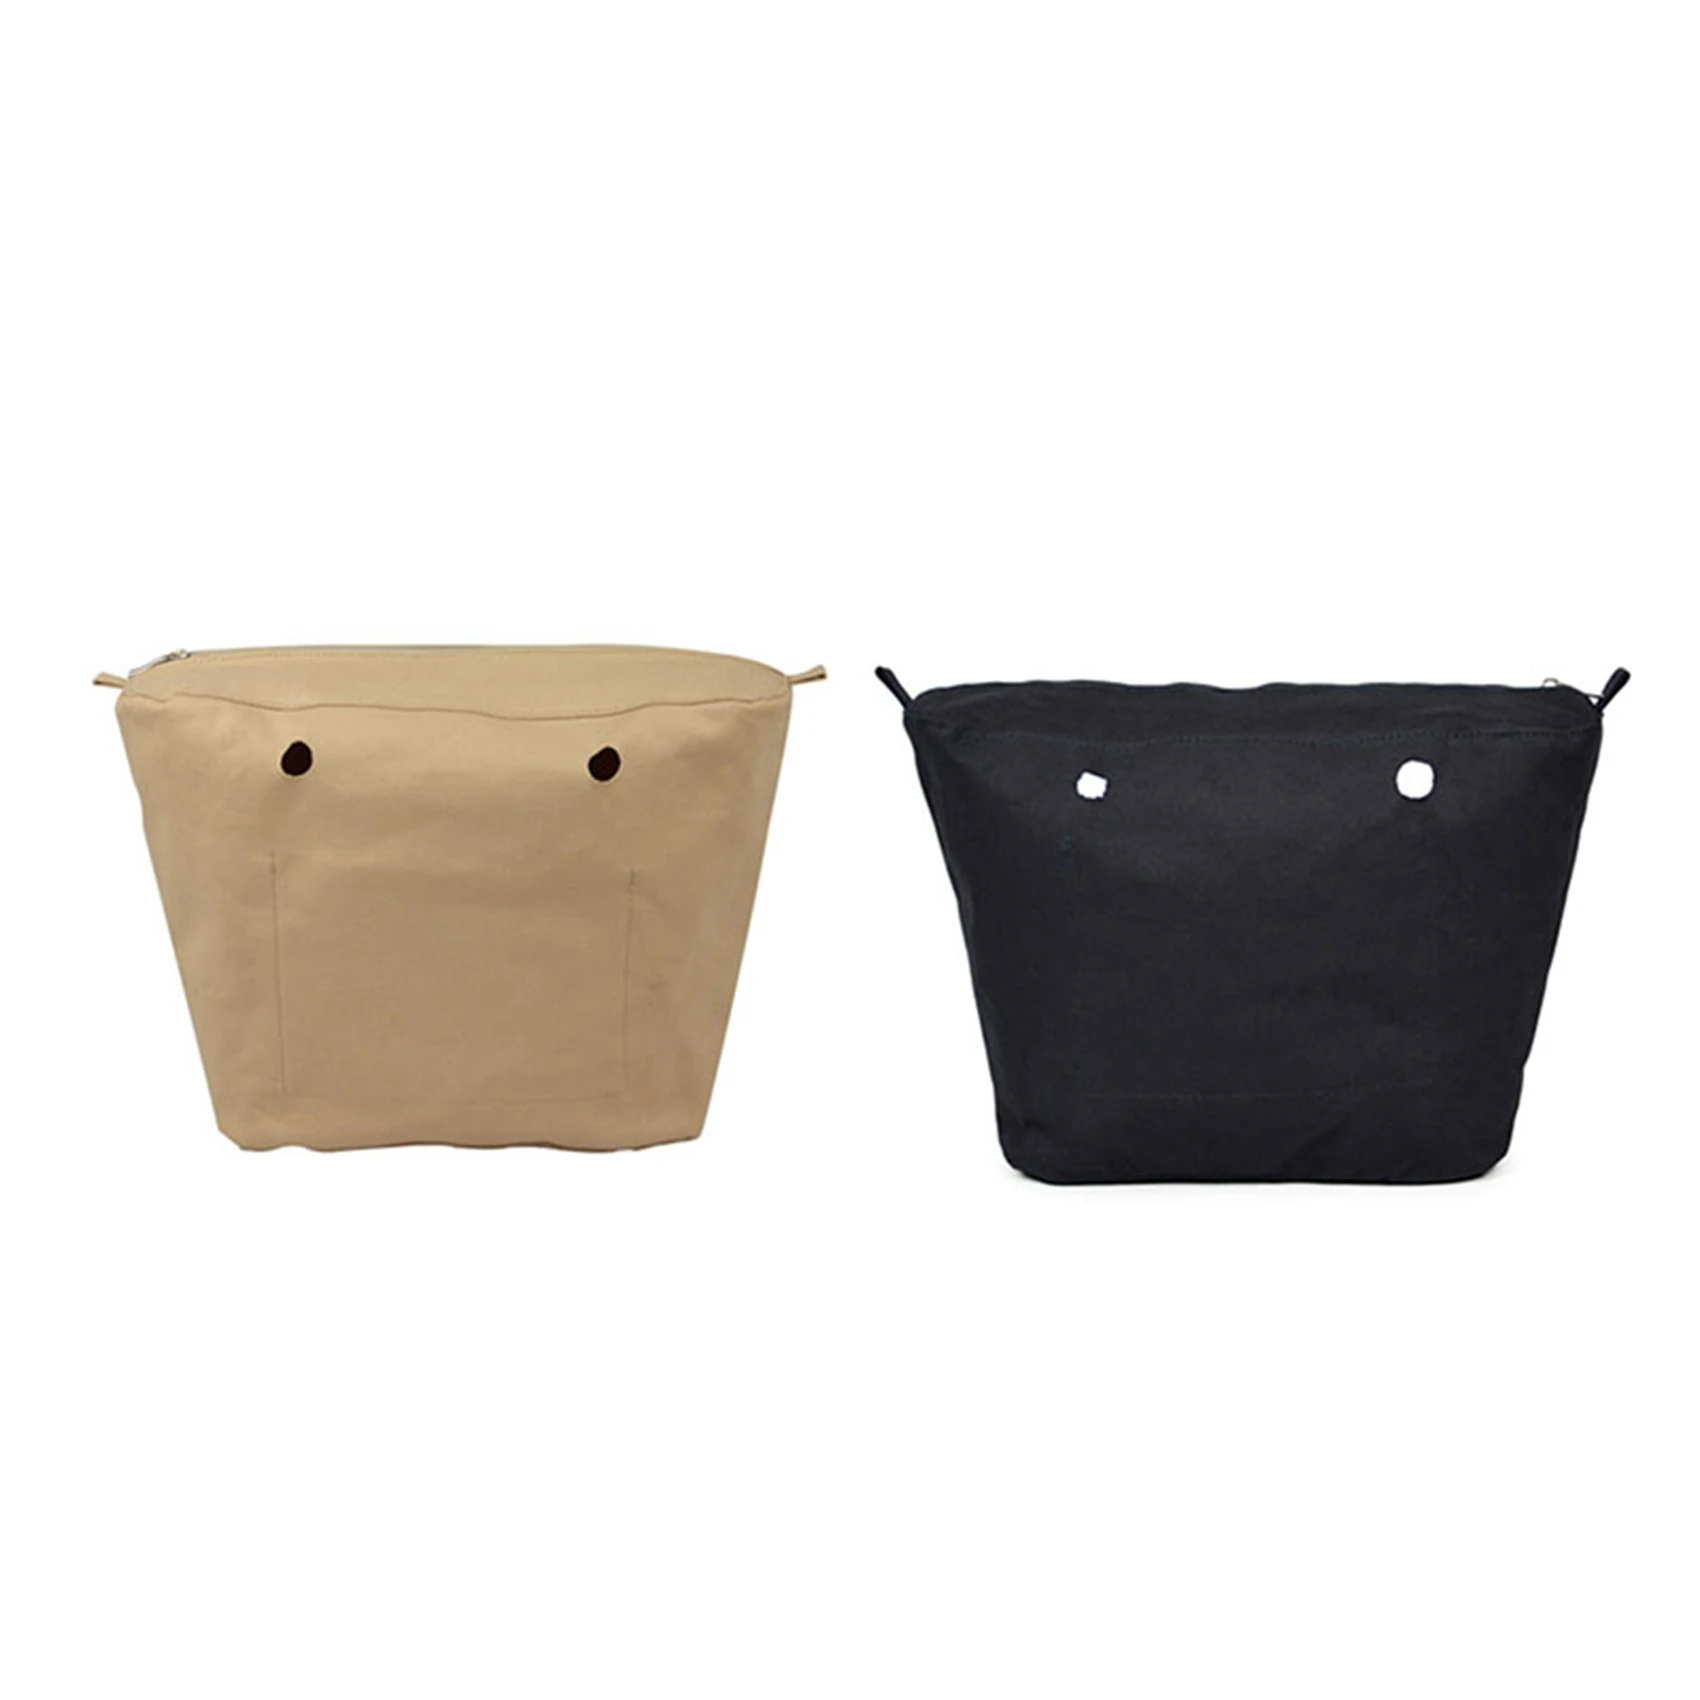 

2 Pcs Waterproof Solid Canvas Insert Inner Lining Insert Zipper Pocket for Obag O Bag Handbag Bag, Khaki & Black